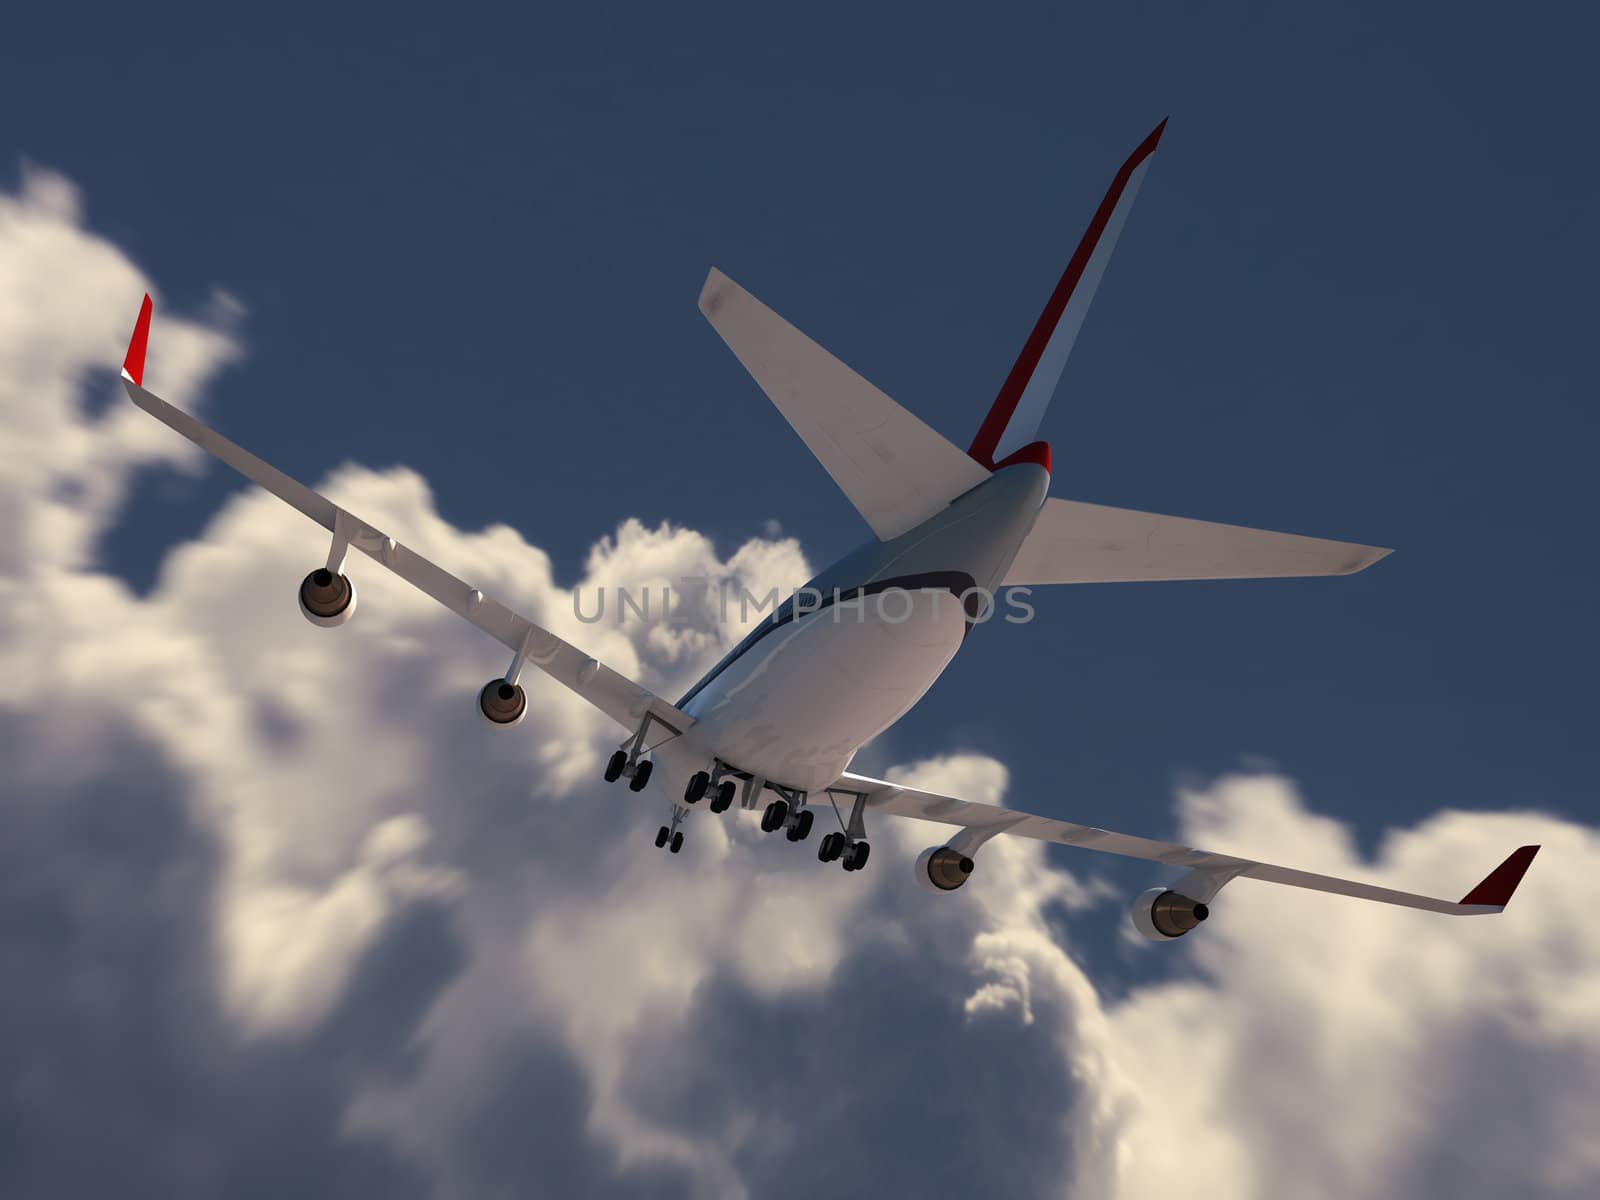 Airplane taking off by EnricoAgostoni